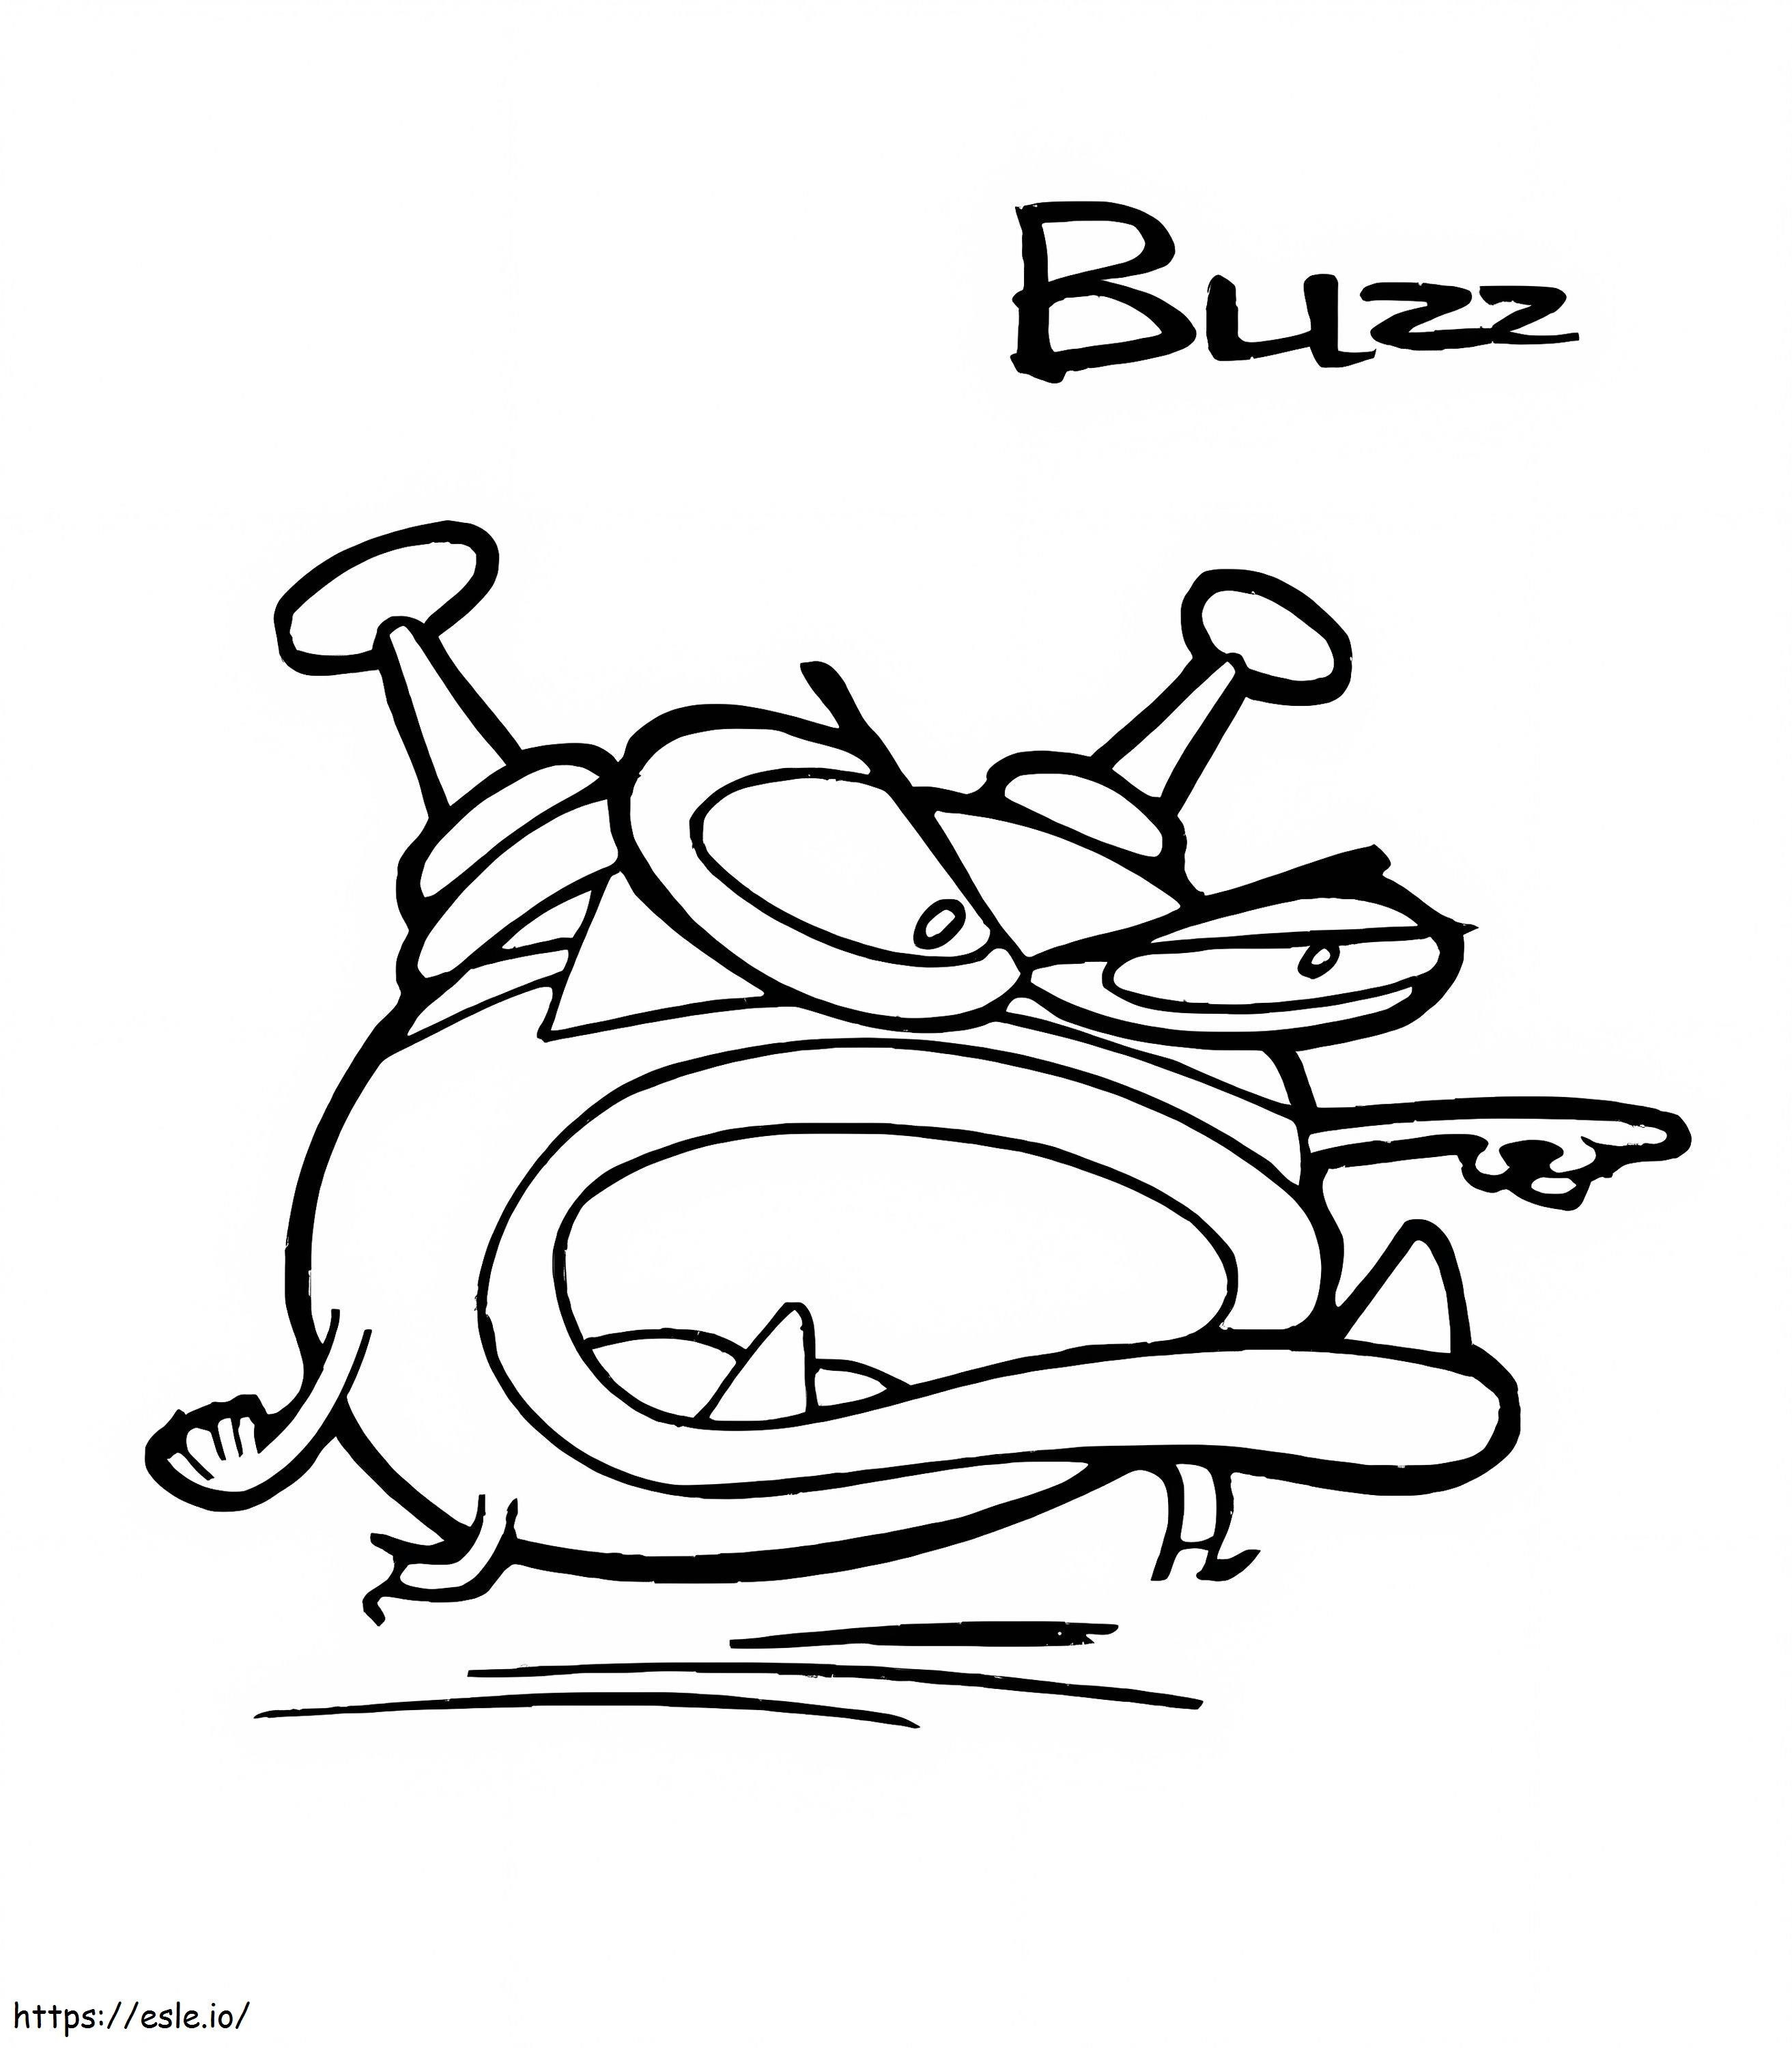 Buzz from Cyberchase värityskuva